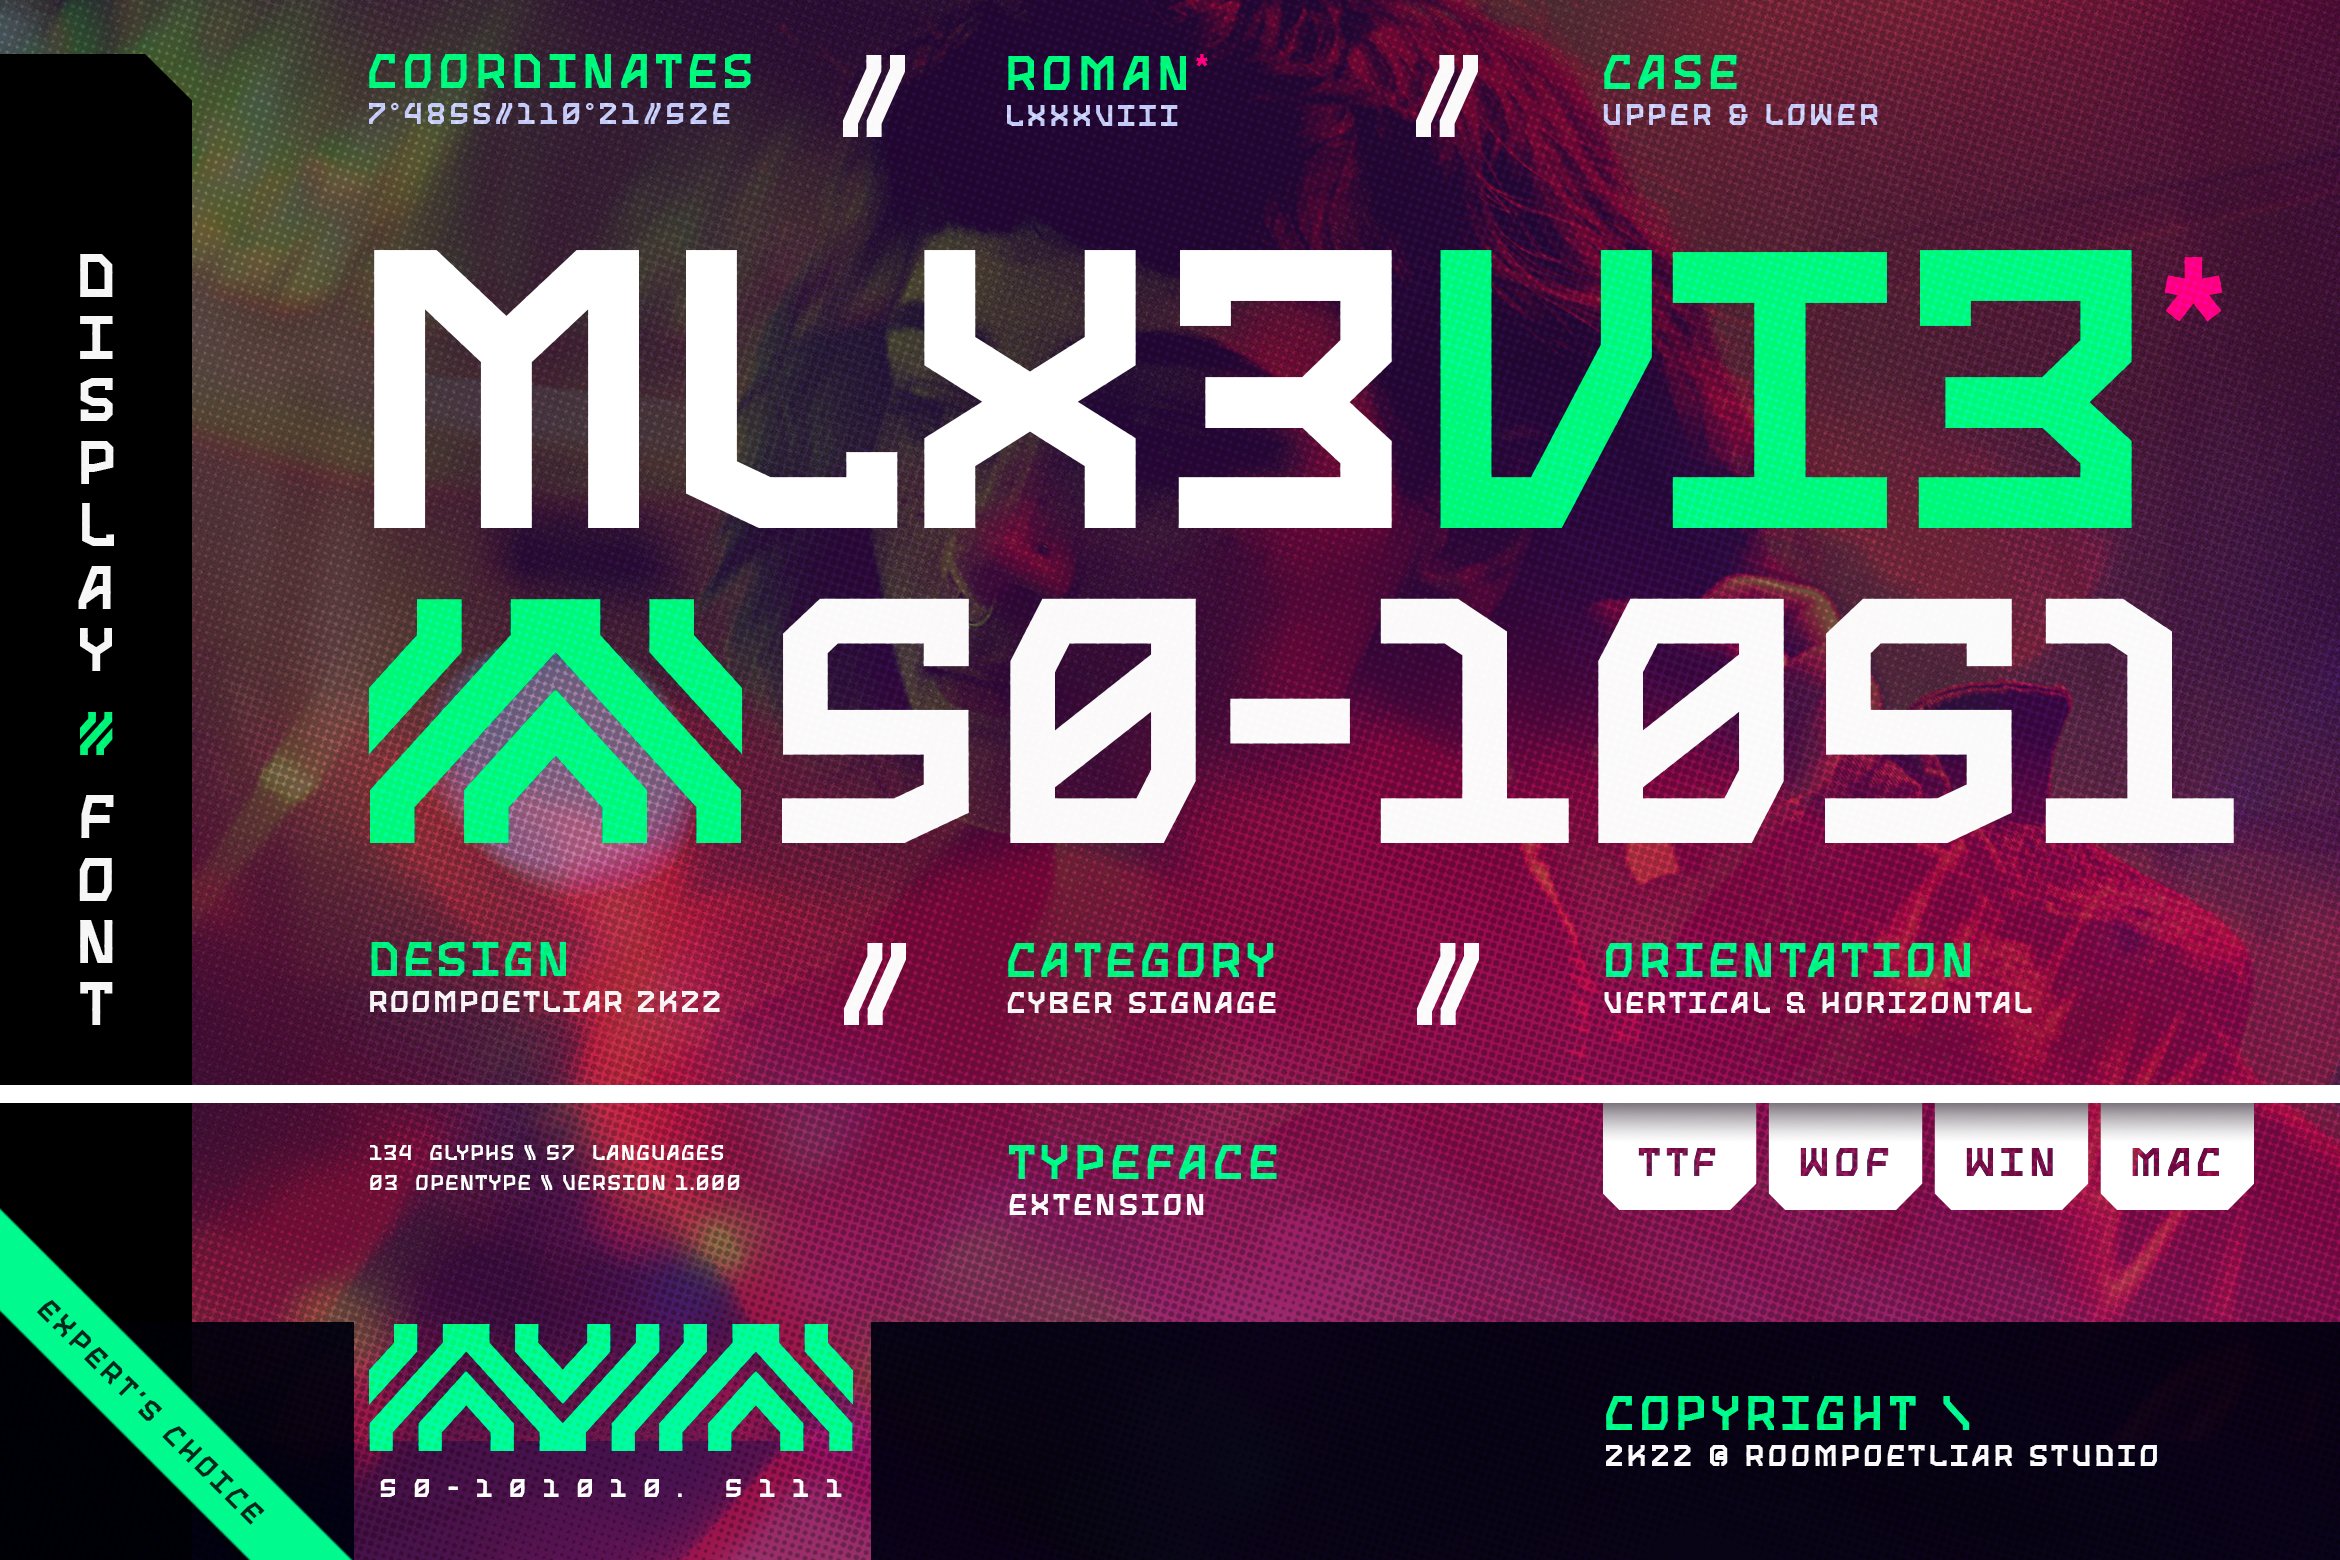 M-LX3VI3 Display Font cover image.